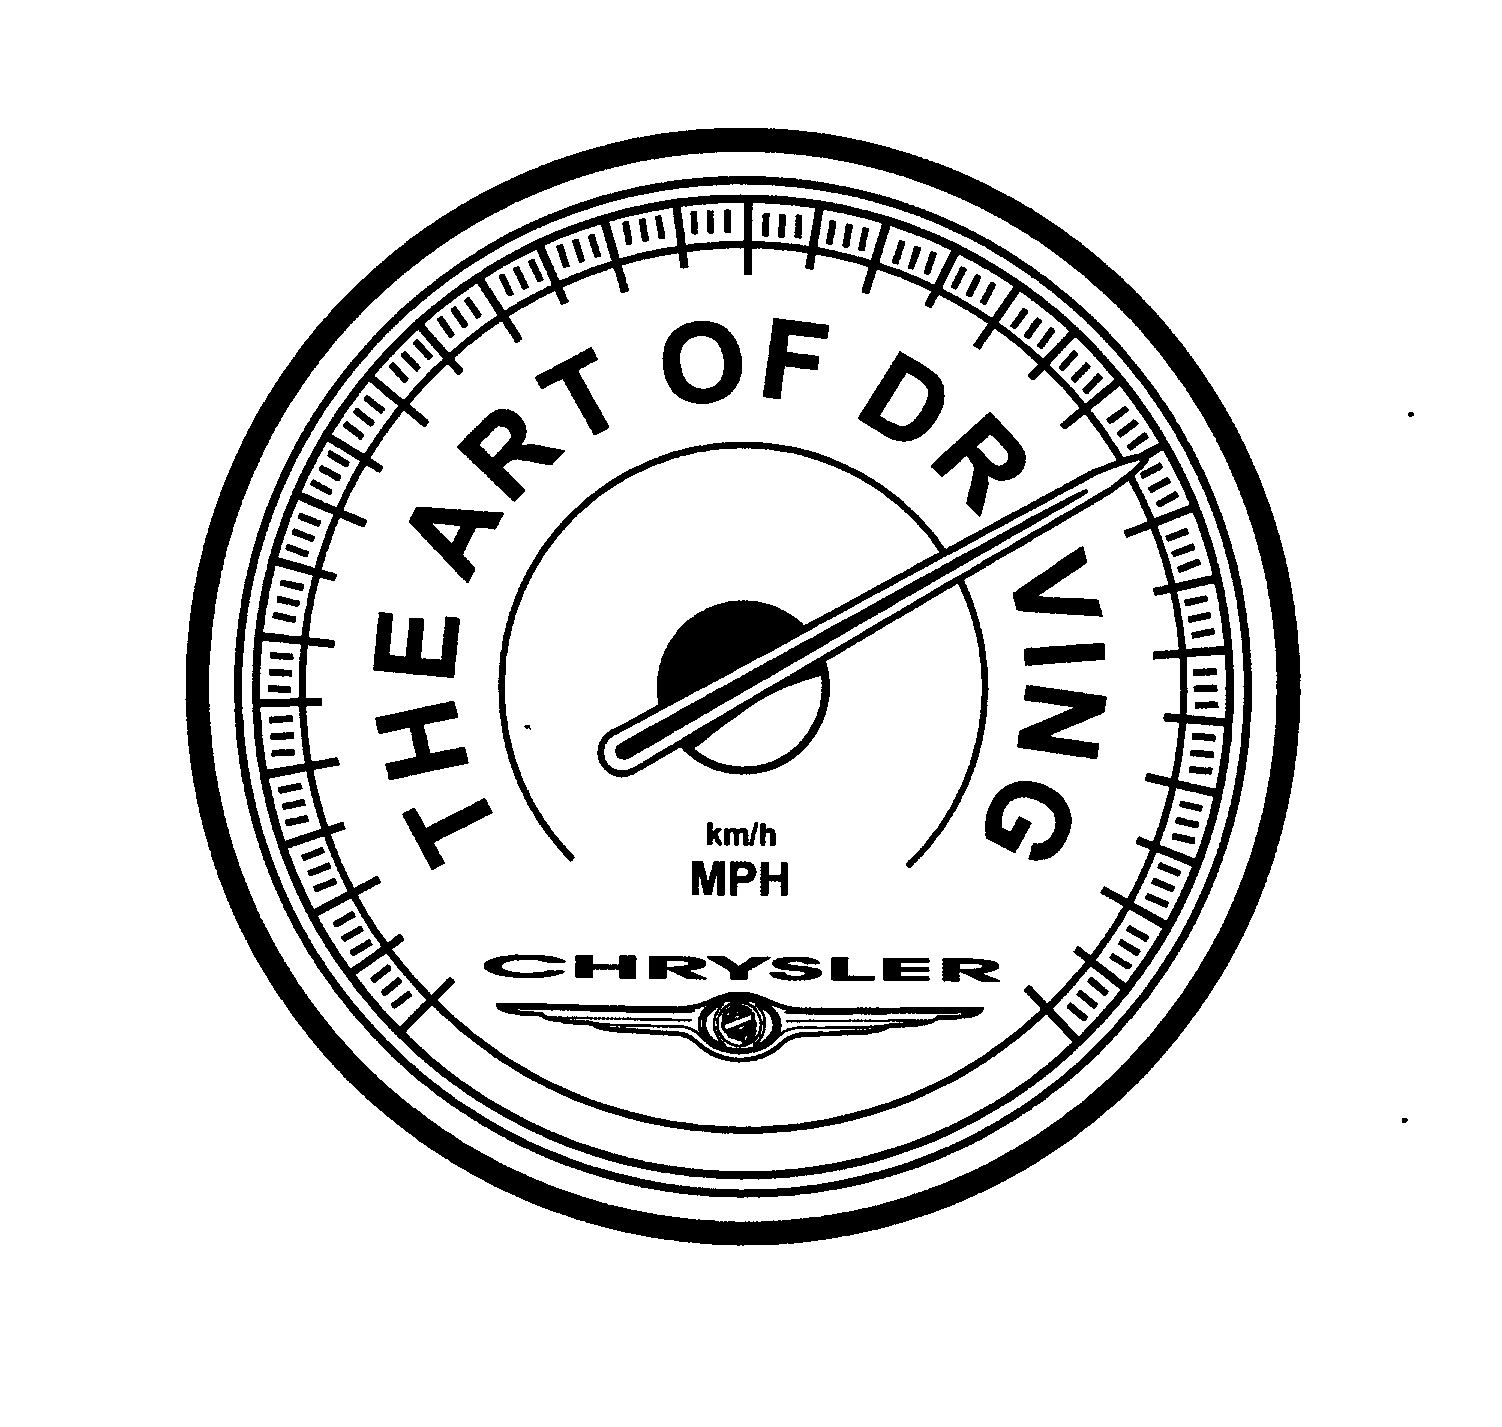  THE ART OF DRIVING CHRYSLER KM/H MPH